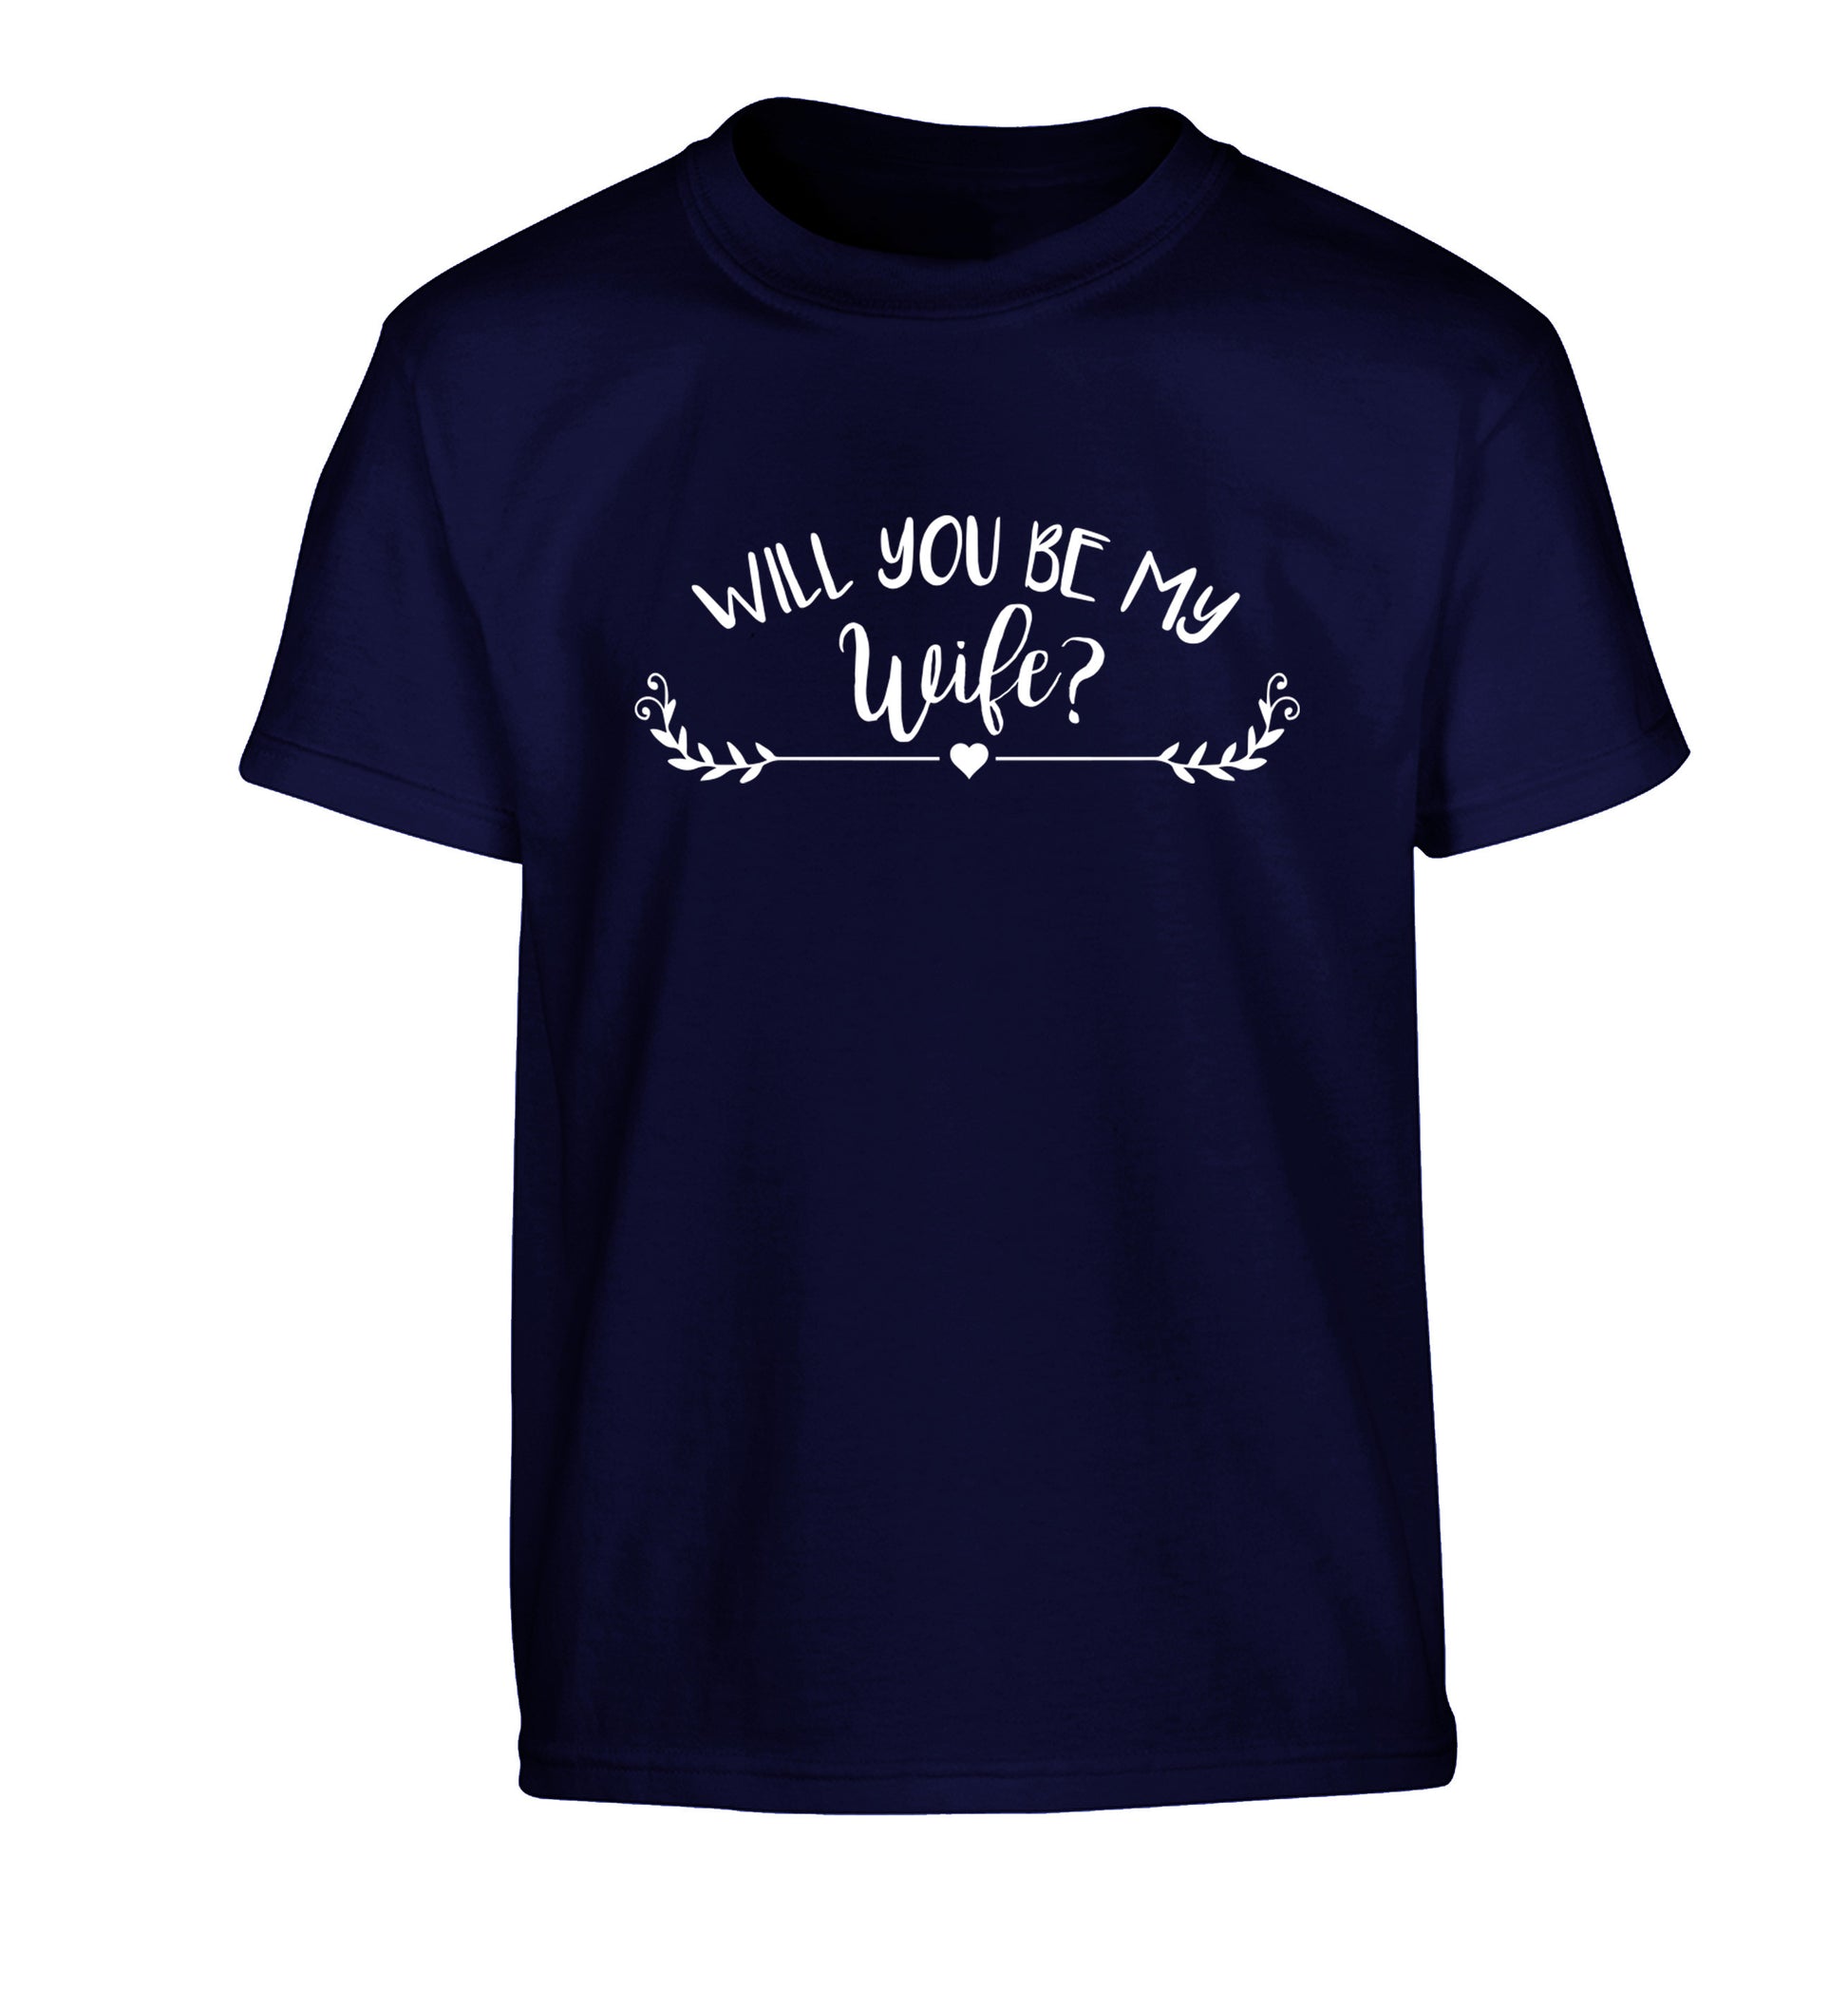 Will you be my wife? Children's navy Tshirt 12-14 Years